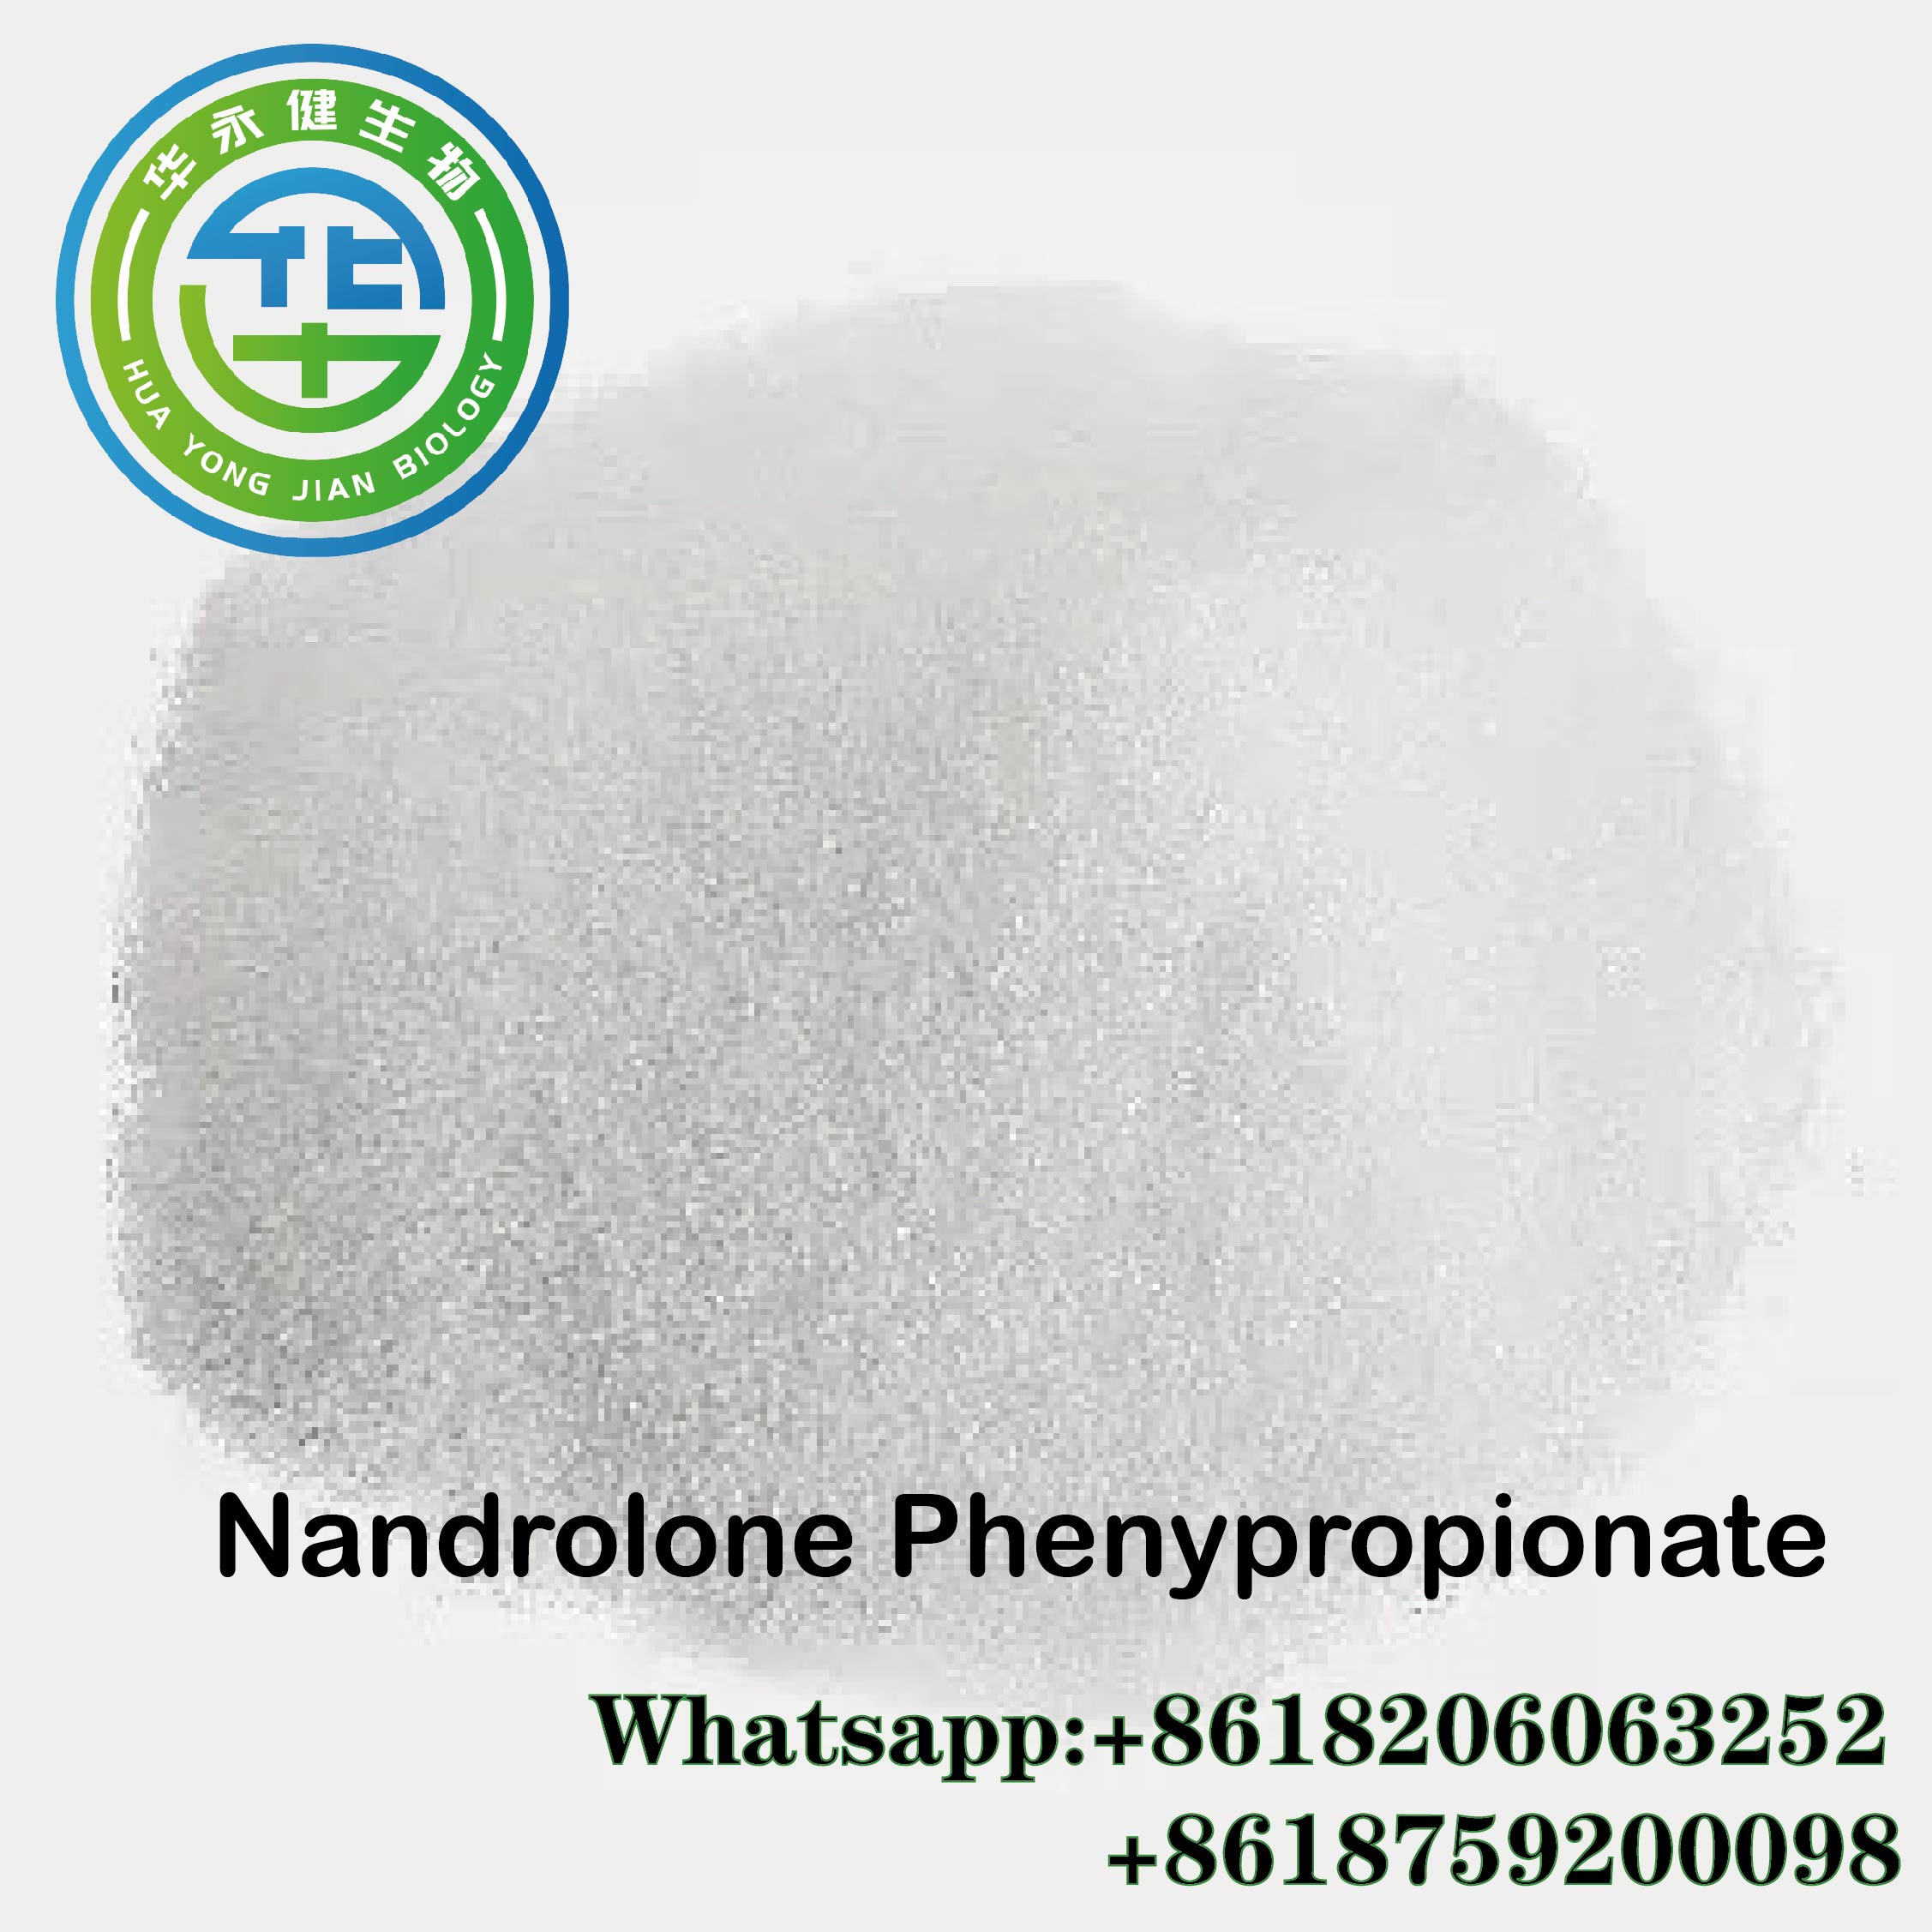 Nandrolone Phenylpropionate/ NPP Anabolic Powder For Fat Loss Bodybuilding CasNO.62-90-8